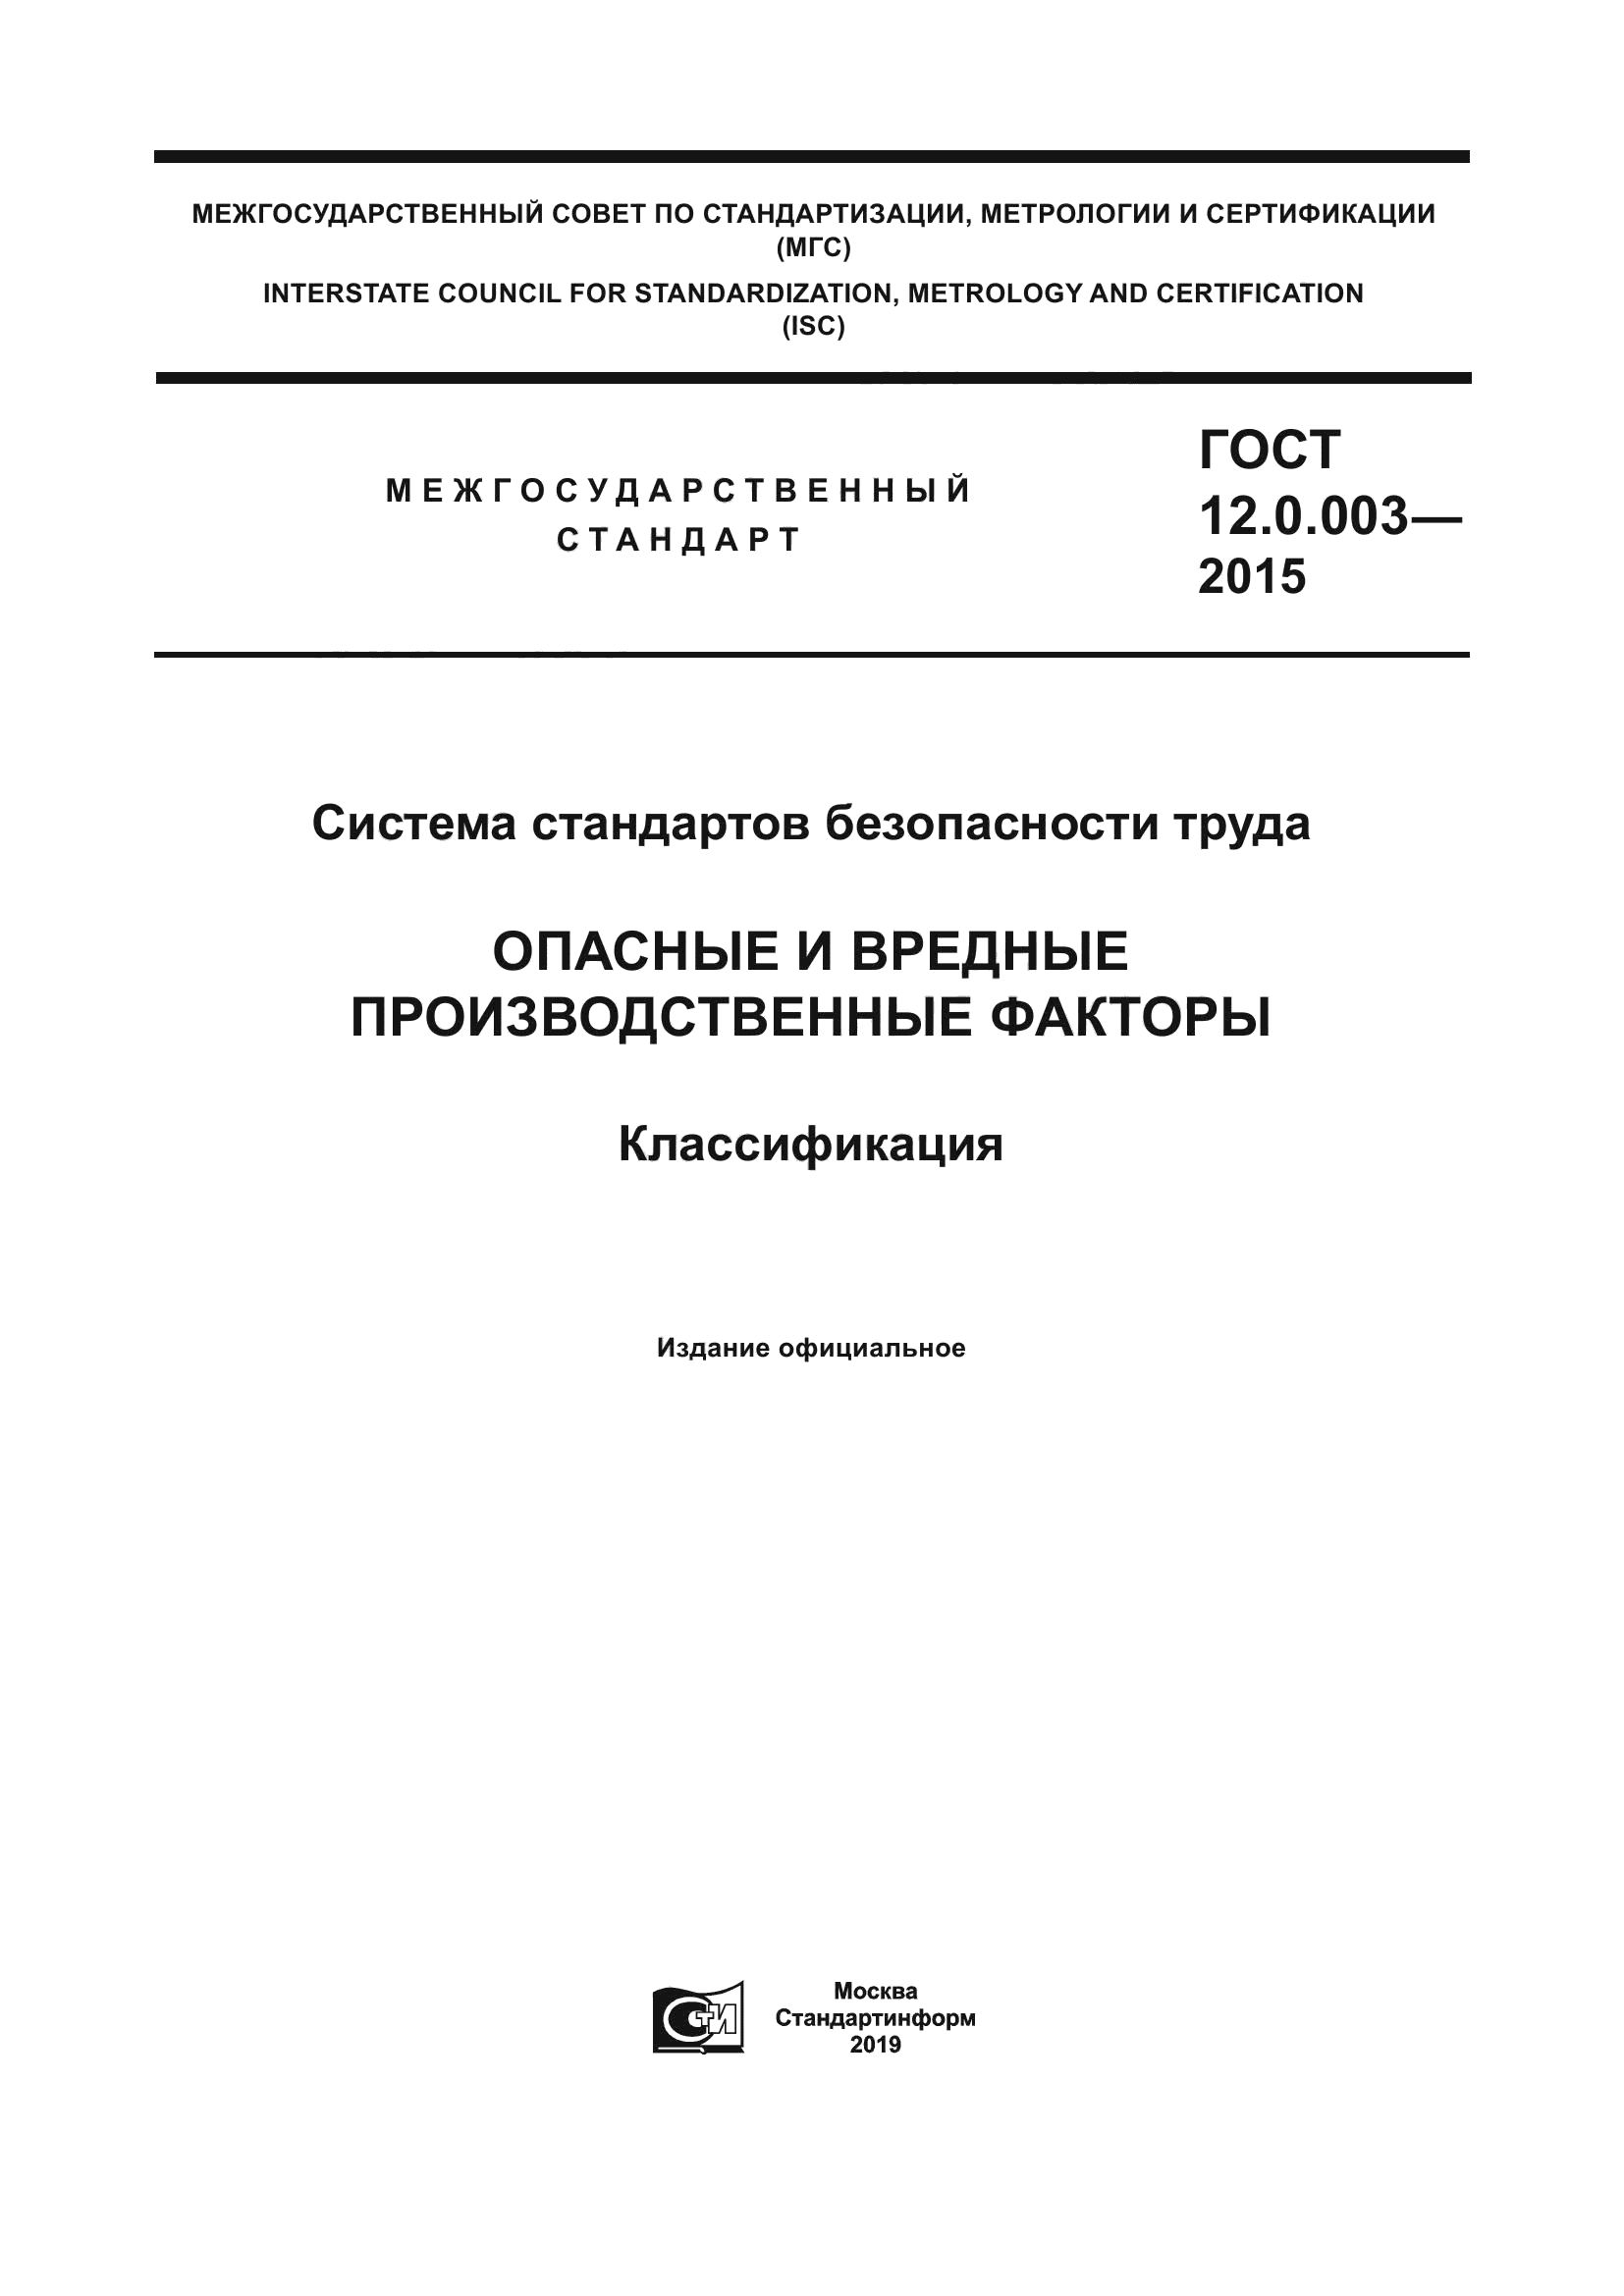 ГОСТ 12.0.003-2015